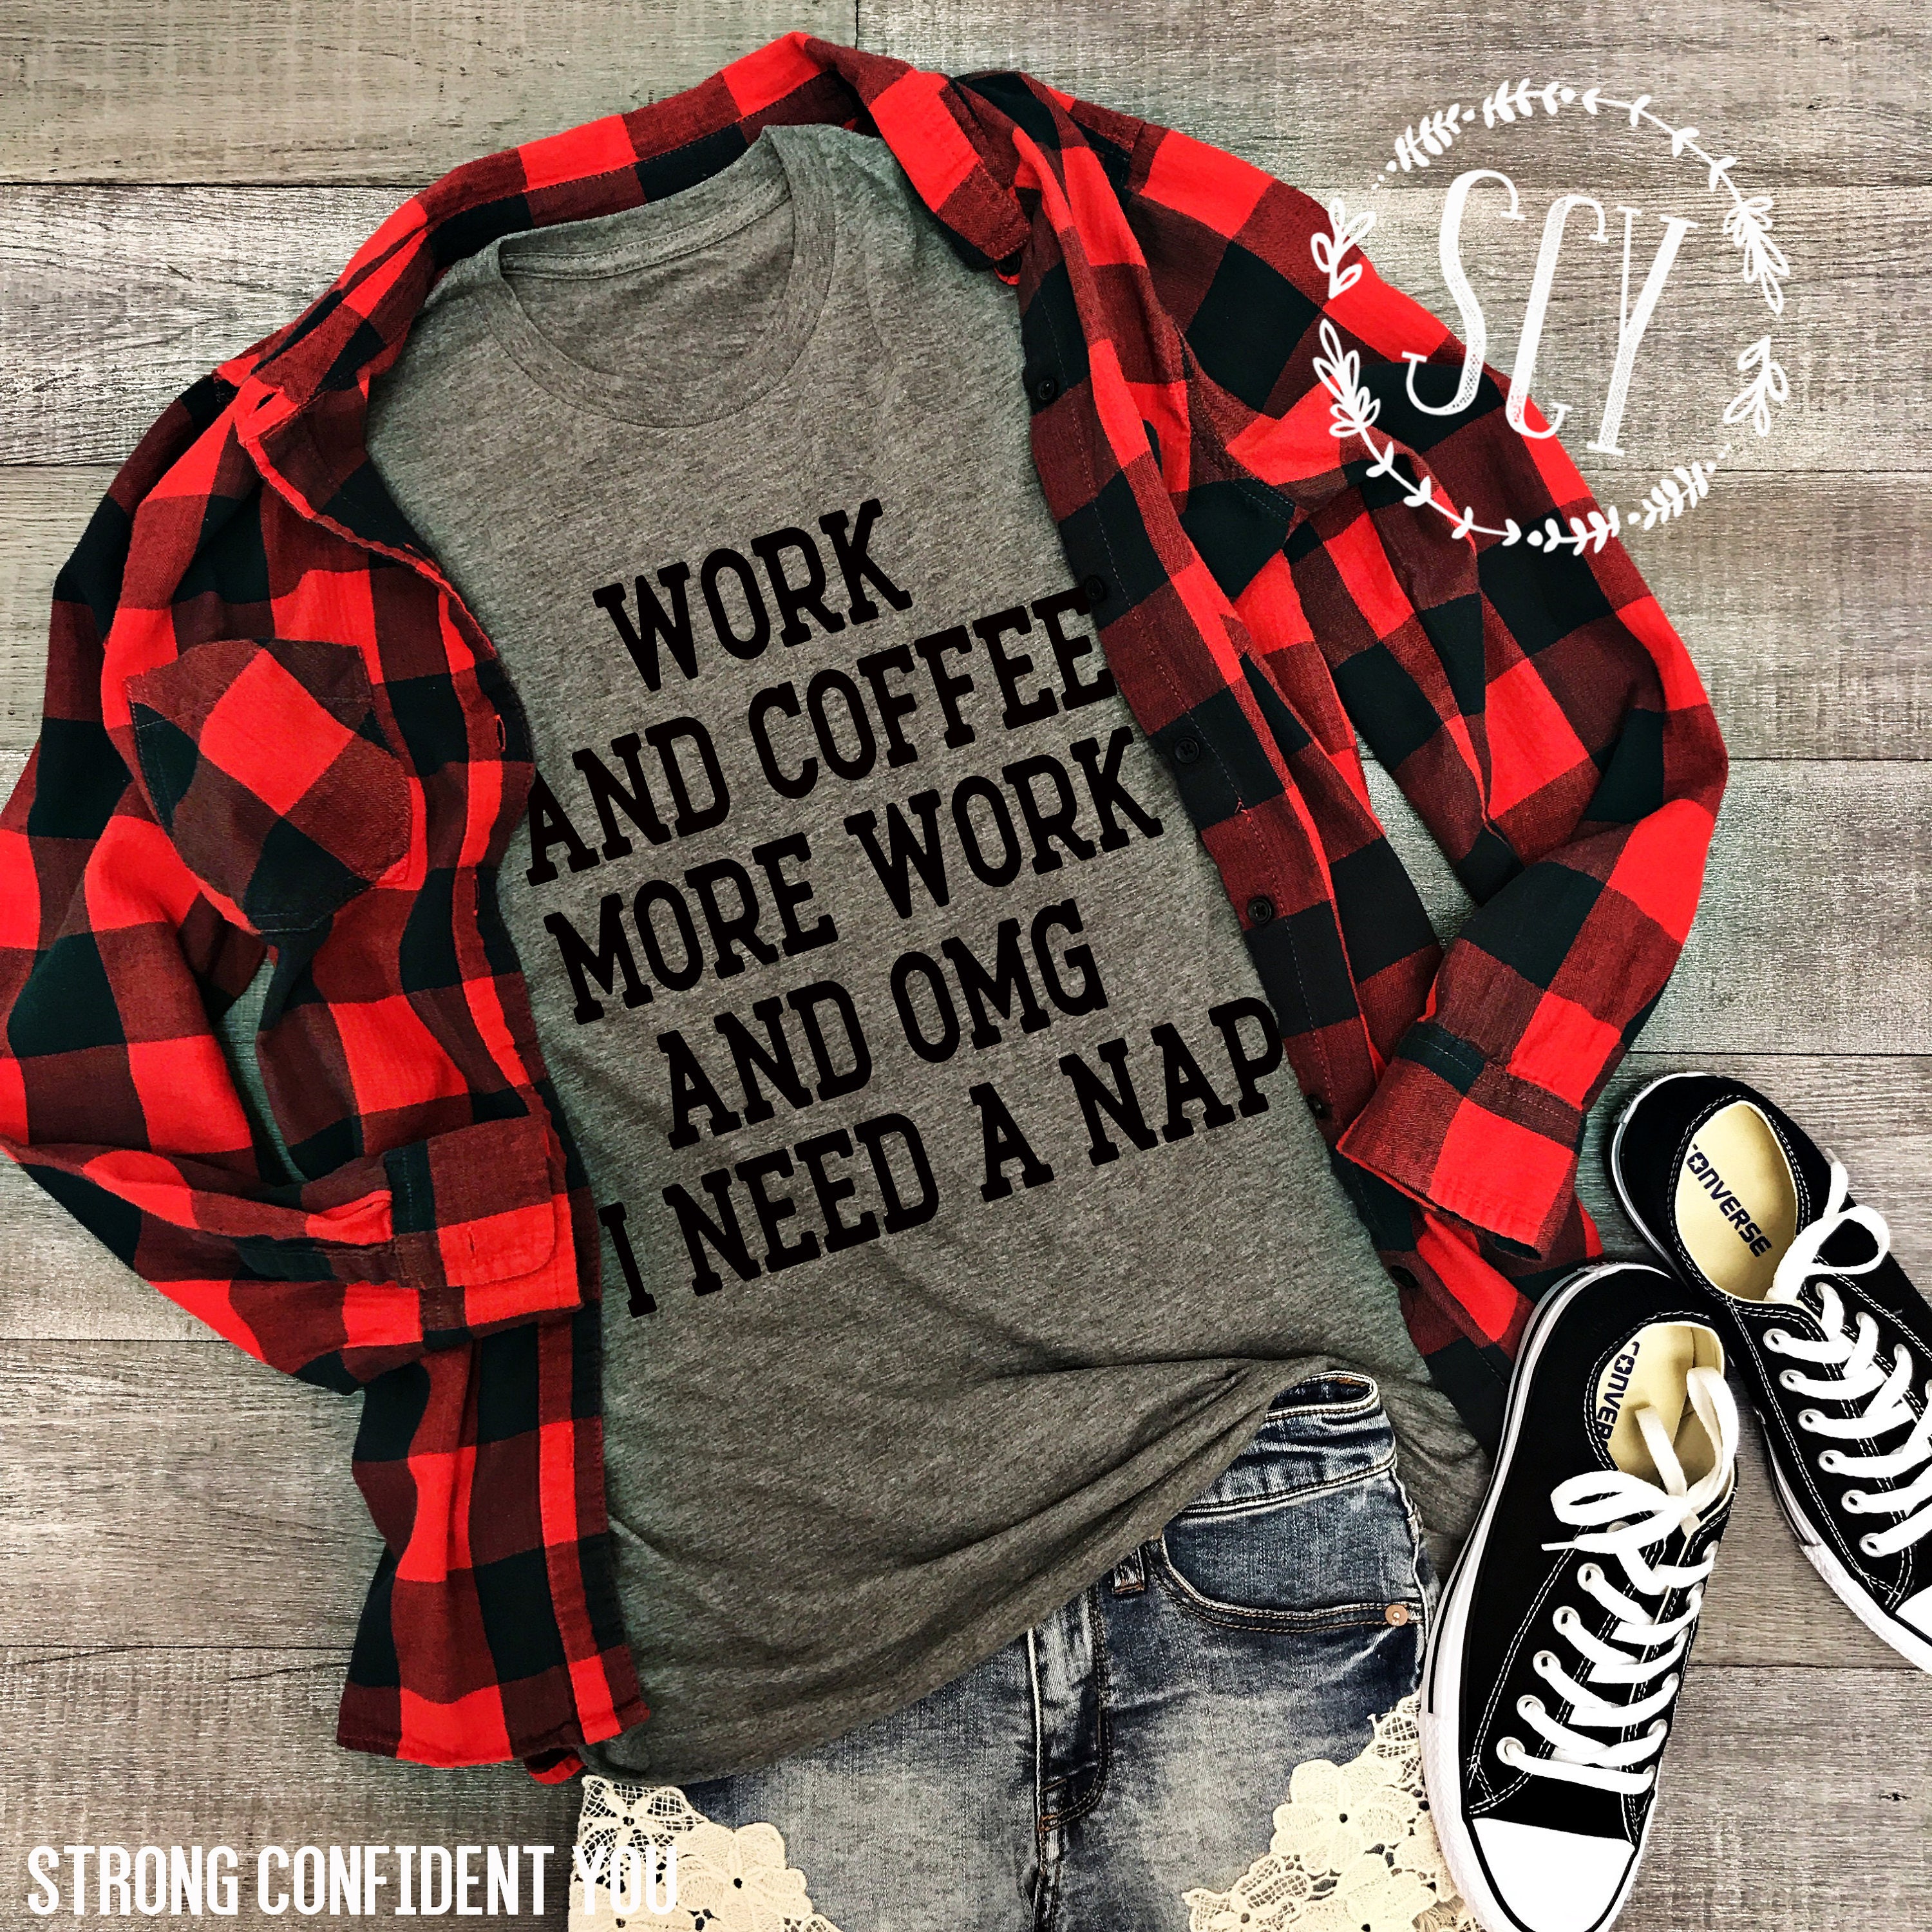 Work And Coffee More Work And OMG I Need A Nap Funny Tee Shirt - Adulting Shirt - Workout Tee - Monday Tee Shirt - Work Shirt